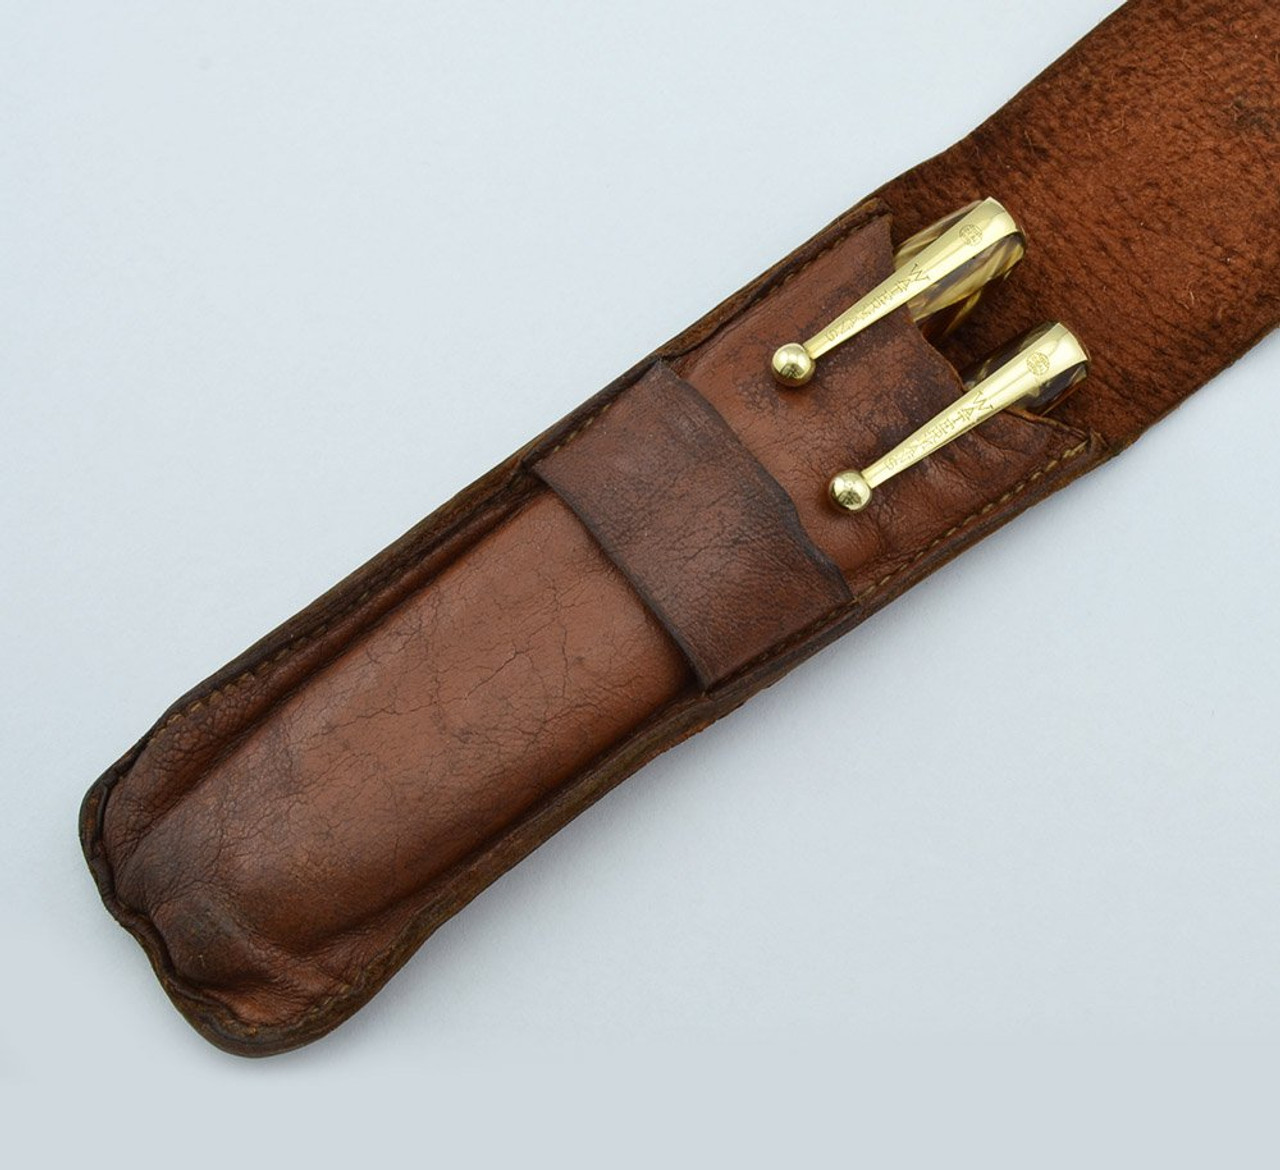 Waterman 1940s Pen Set - Uncommon Model, Military Style Clip, Flexible Nib, Leather Pouch (Excellent, Restored)